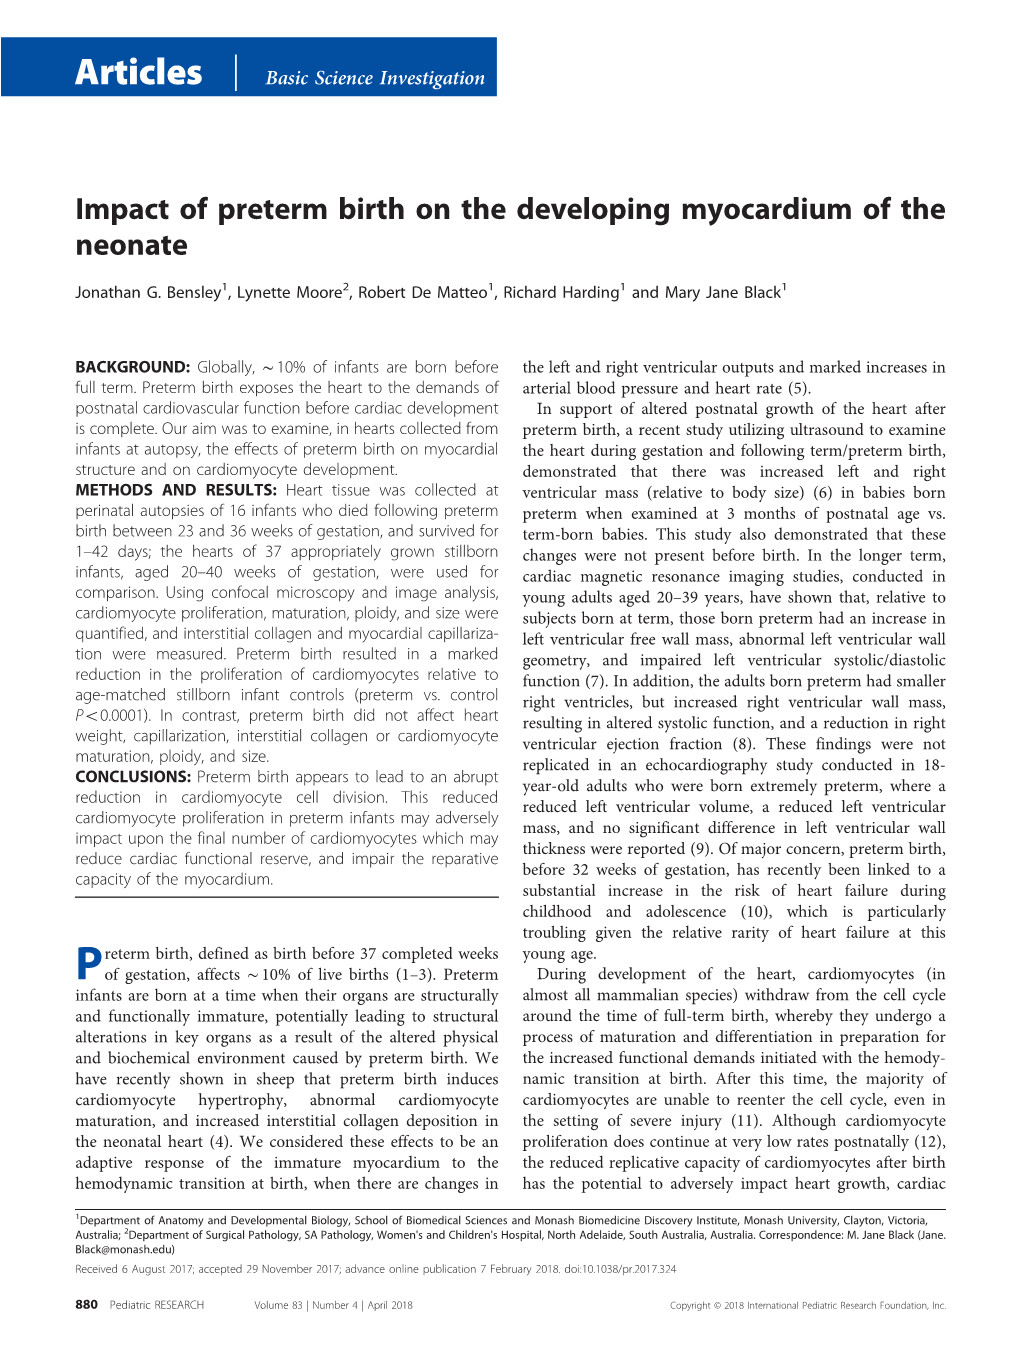 Impact of Preterm Birth on the Developing Myocardium of the Neonate